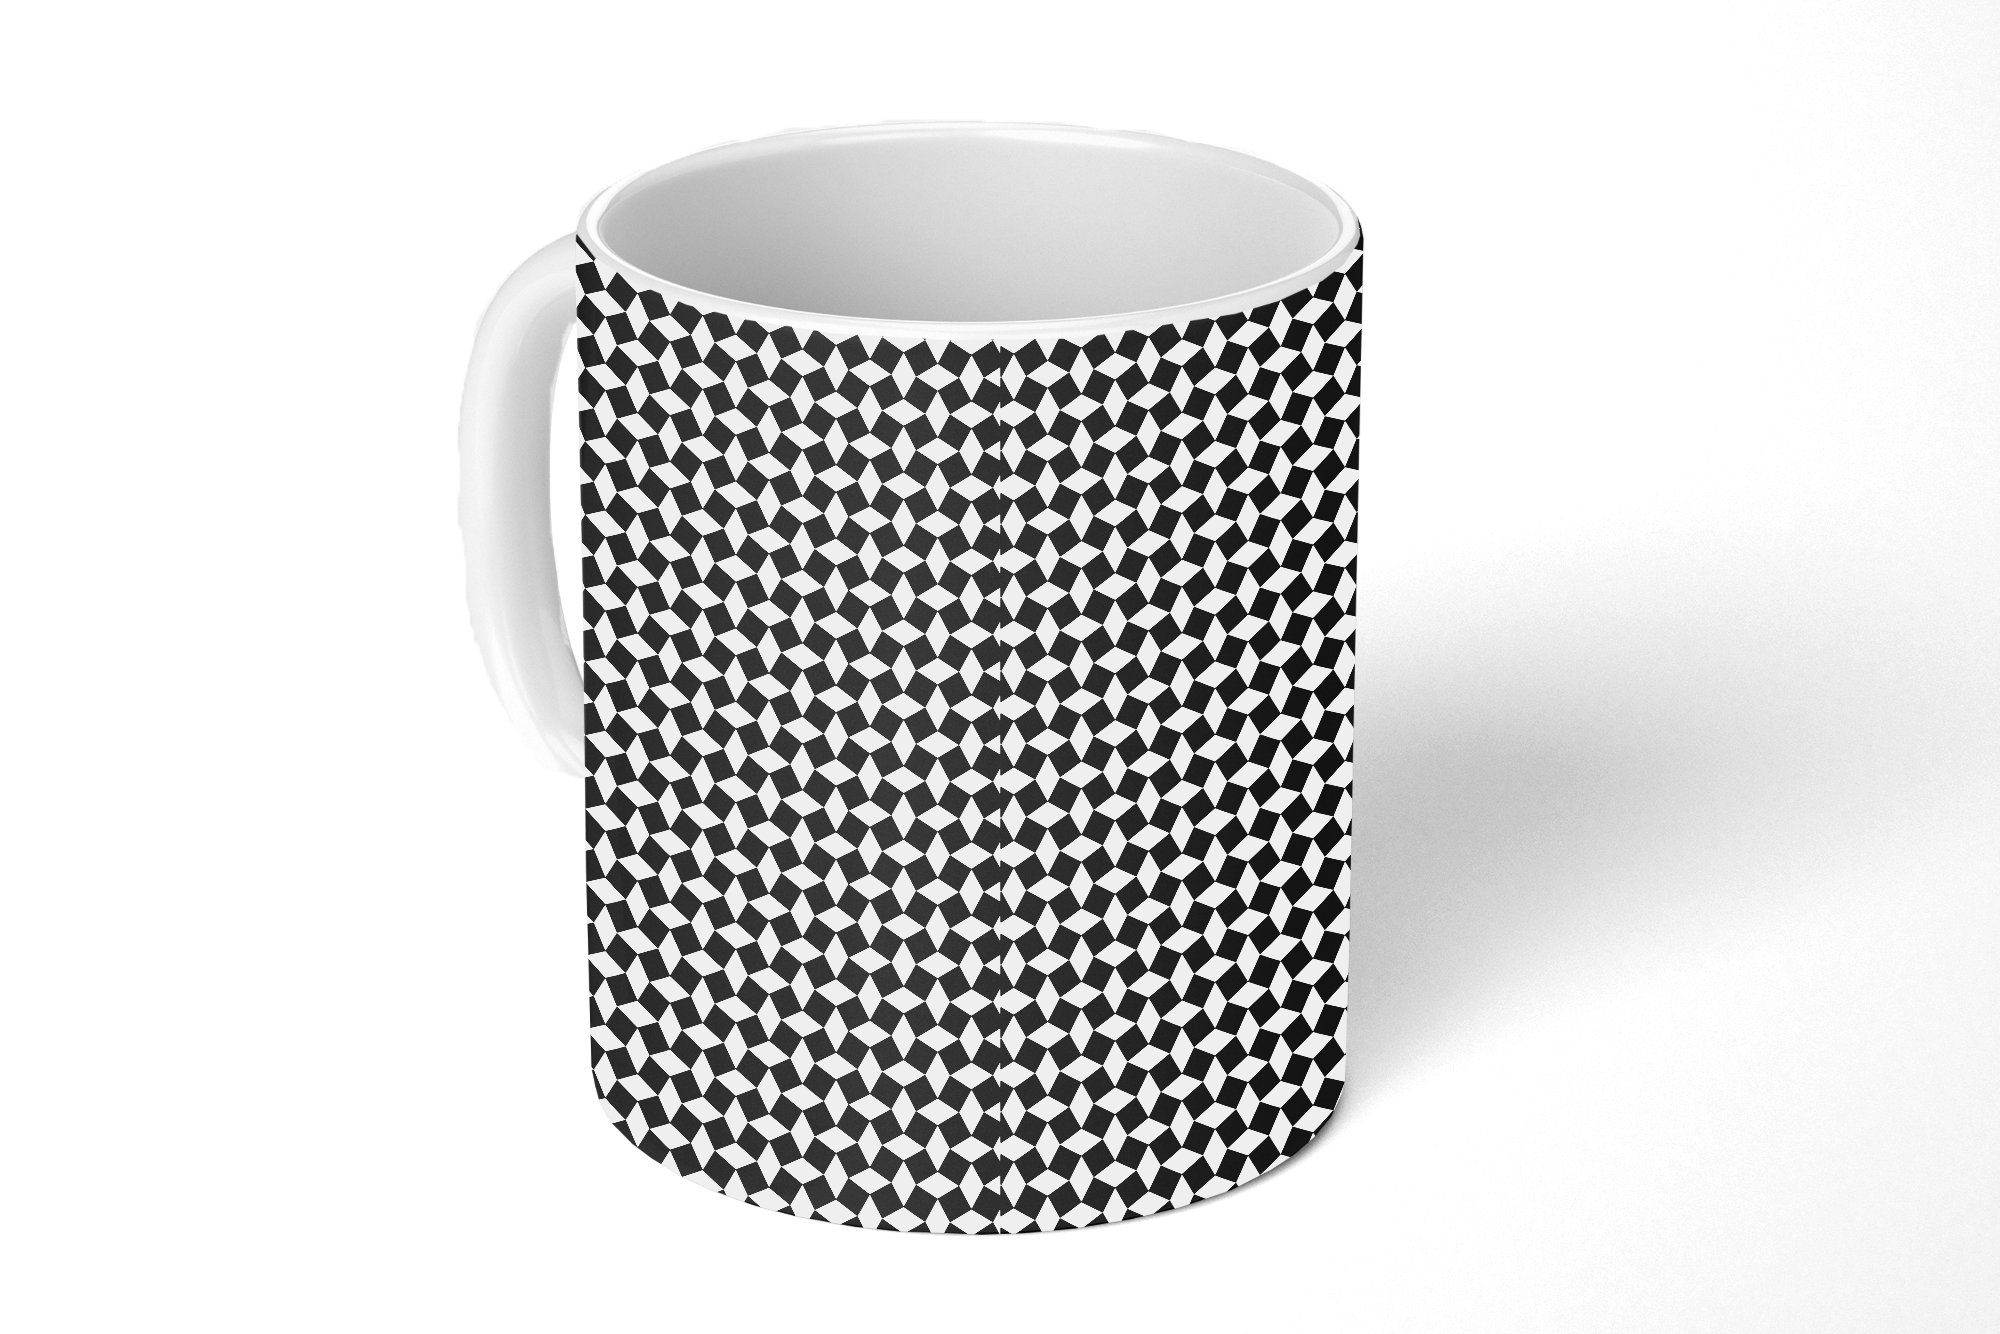 MuchoWow Tasse Gestaltung - Geometrie - Muster, Keramik, Kaffeetassen, Teetasse, Becher, Teetasse, Geschenk | Tassen